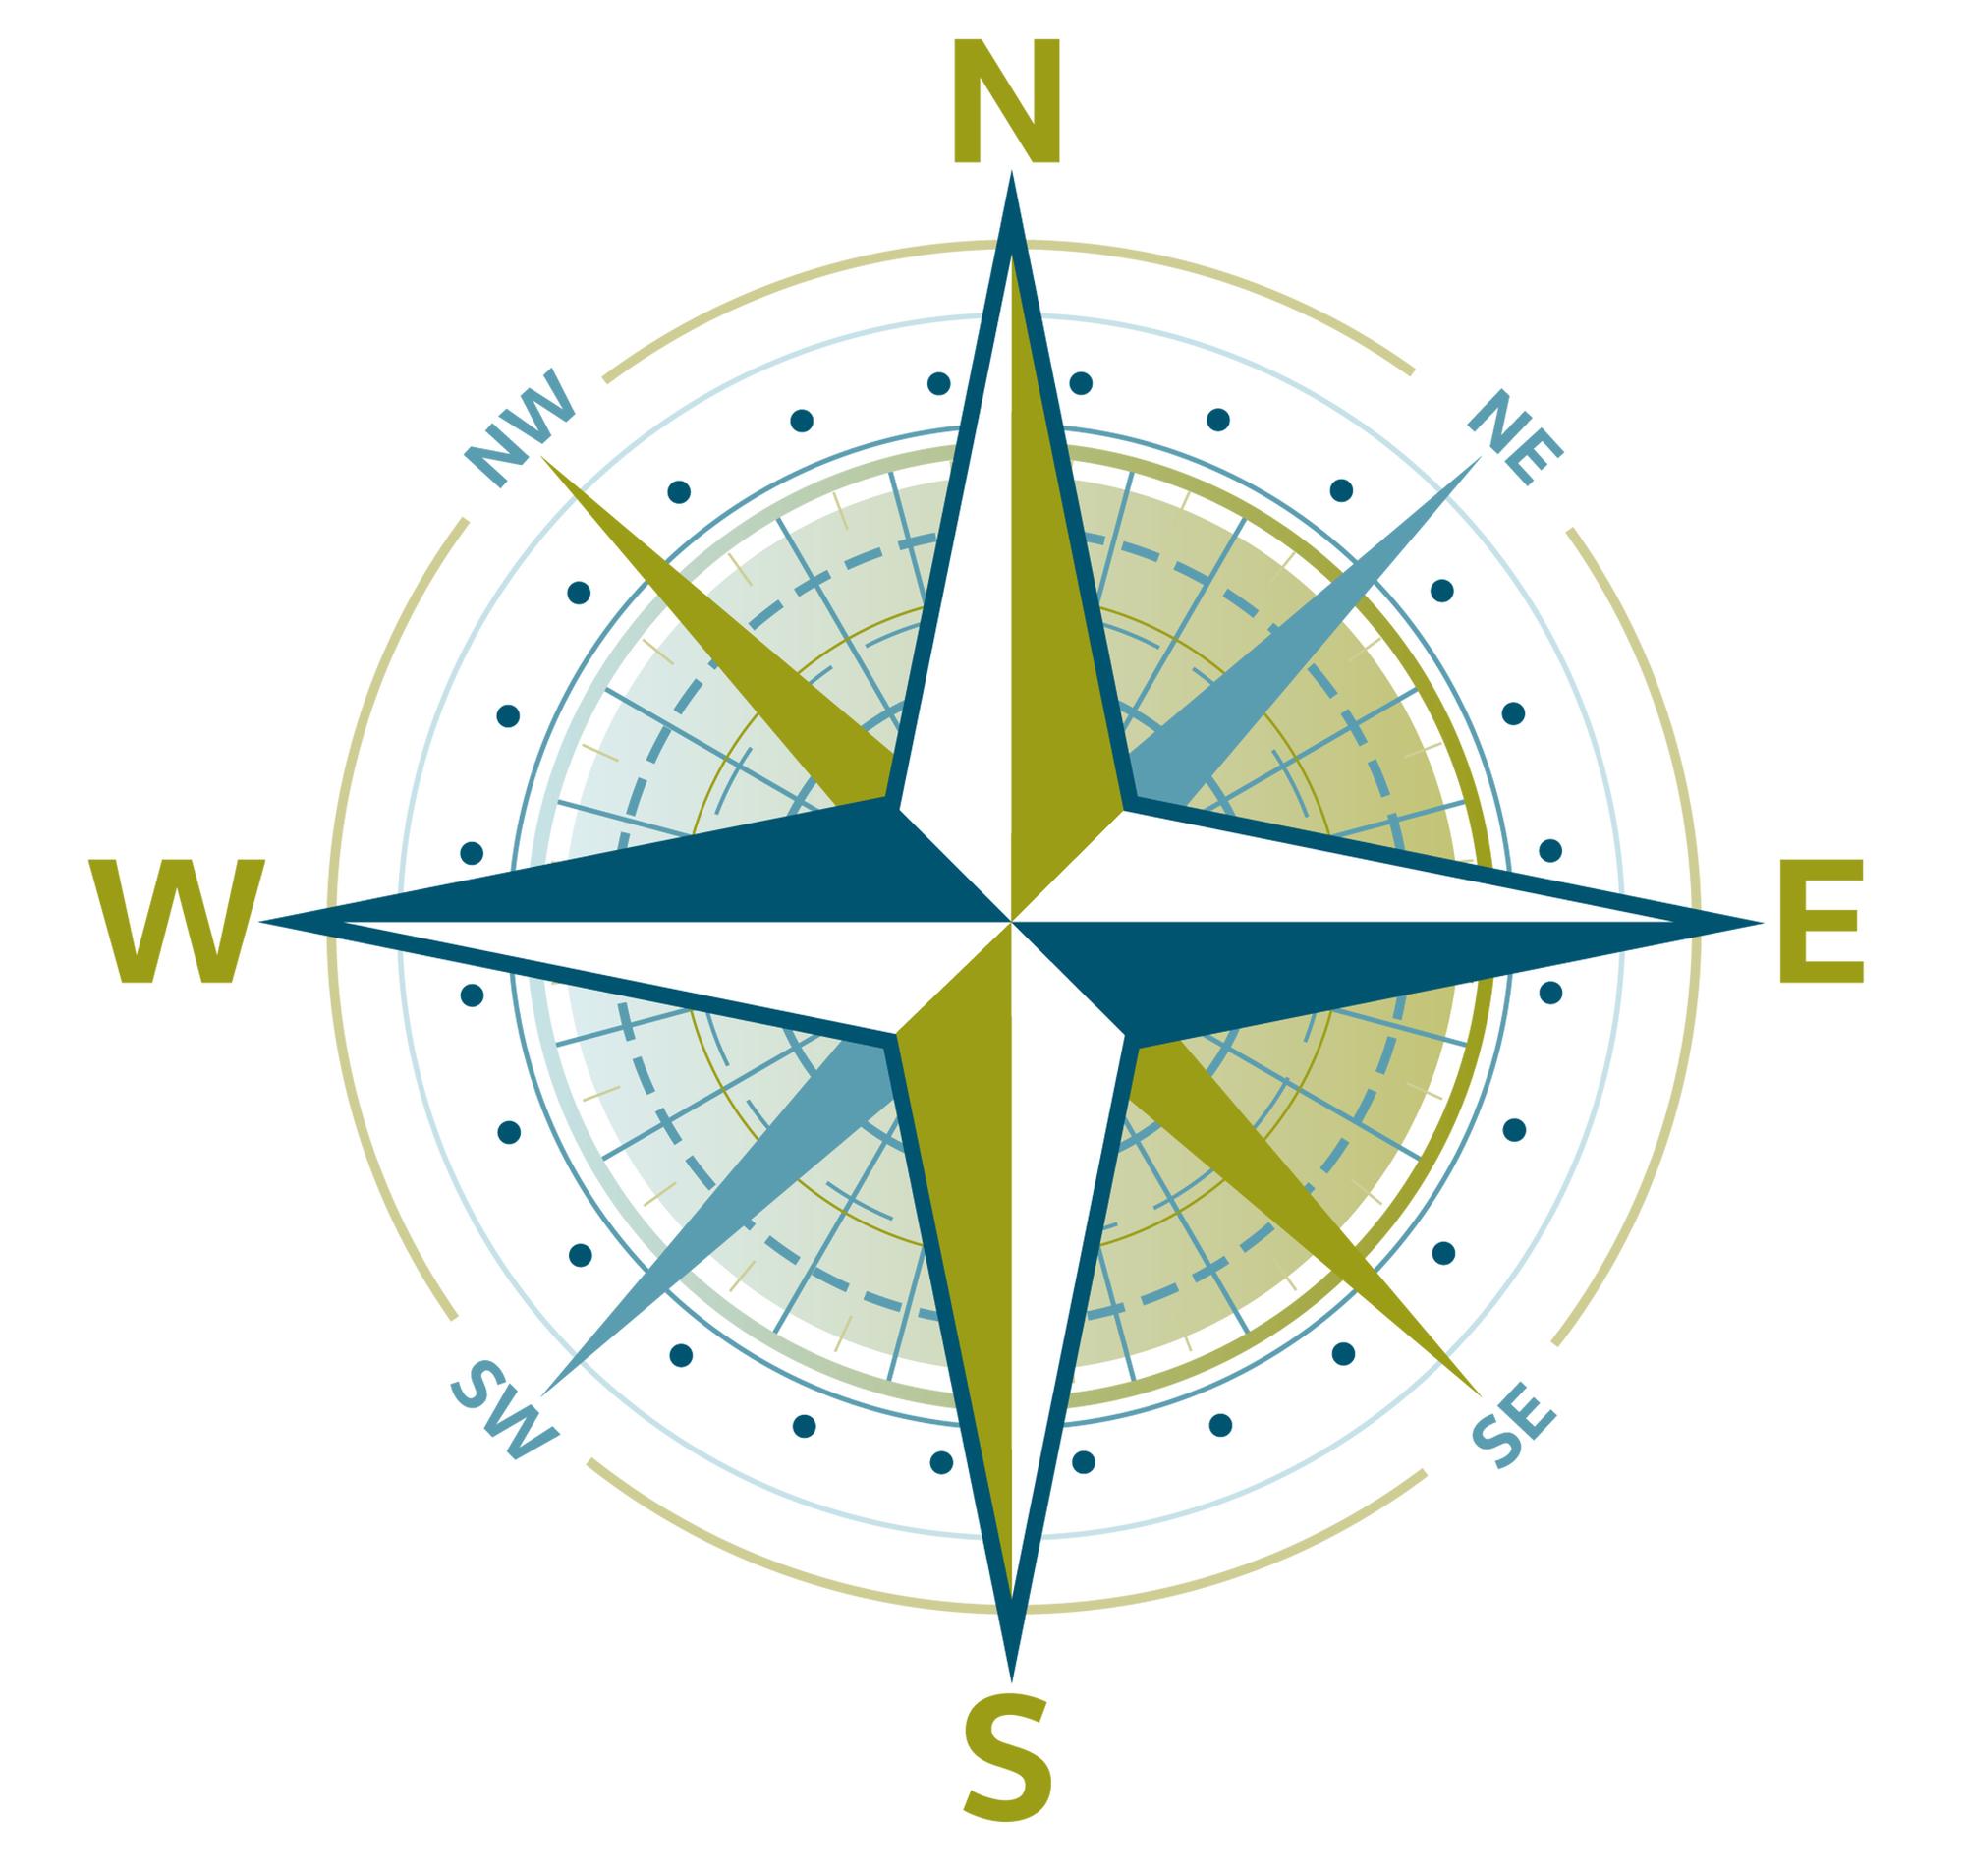 kompass